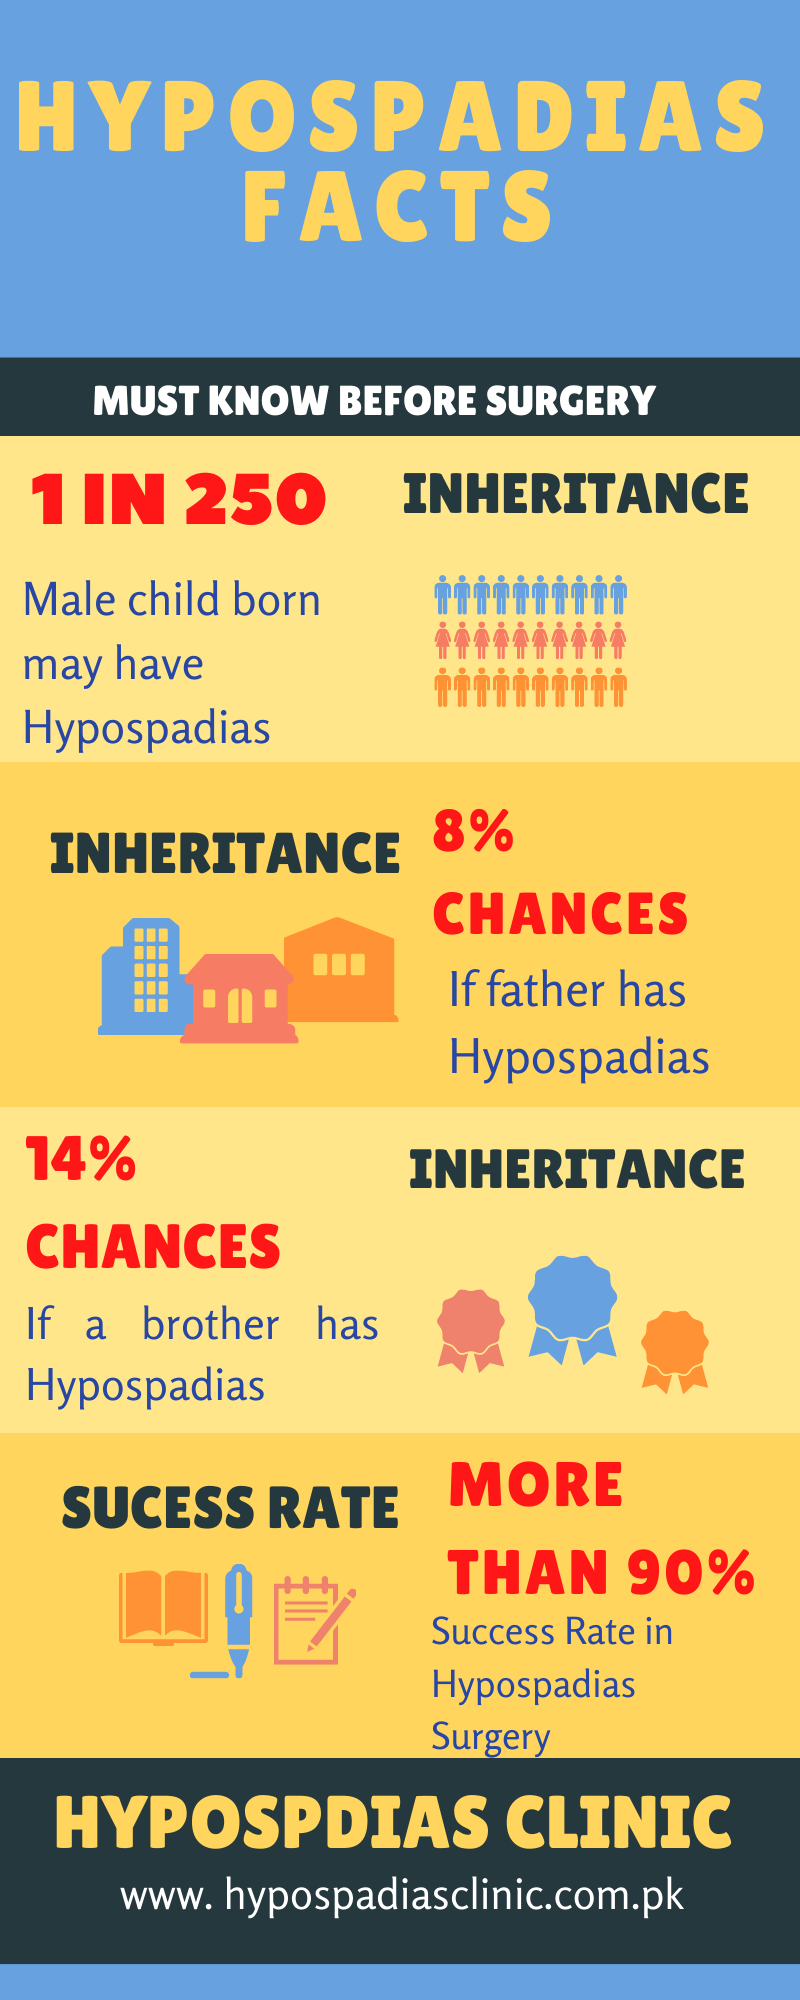 Is Hypospadias genetic?